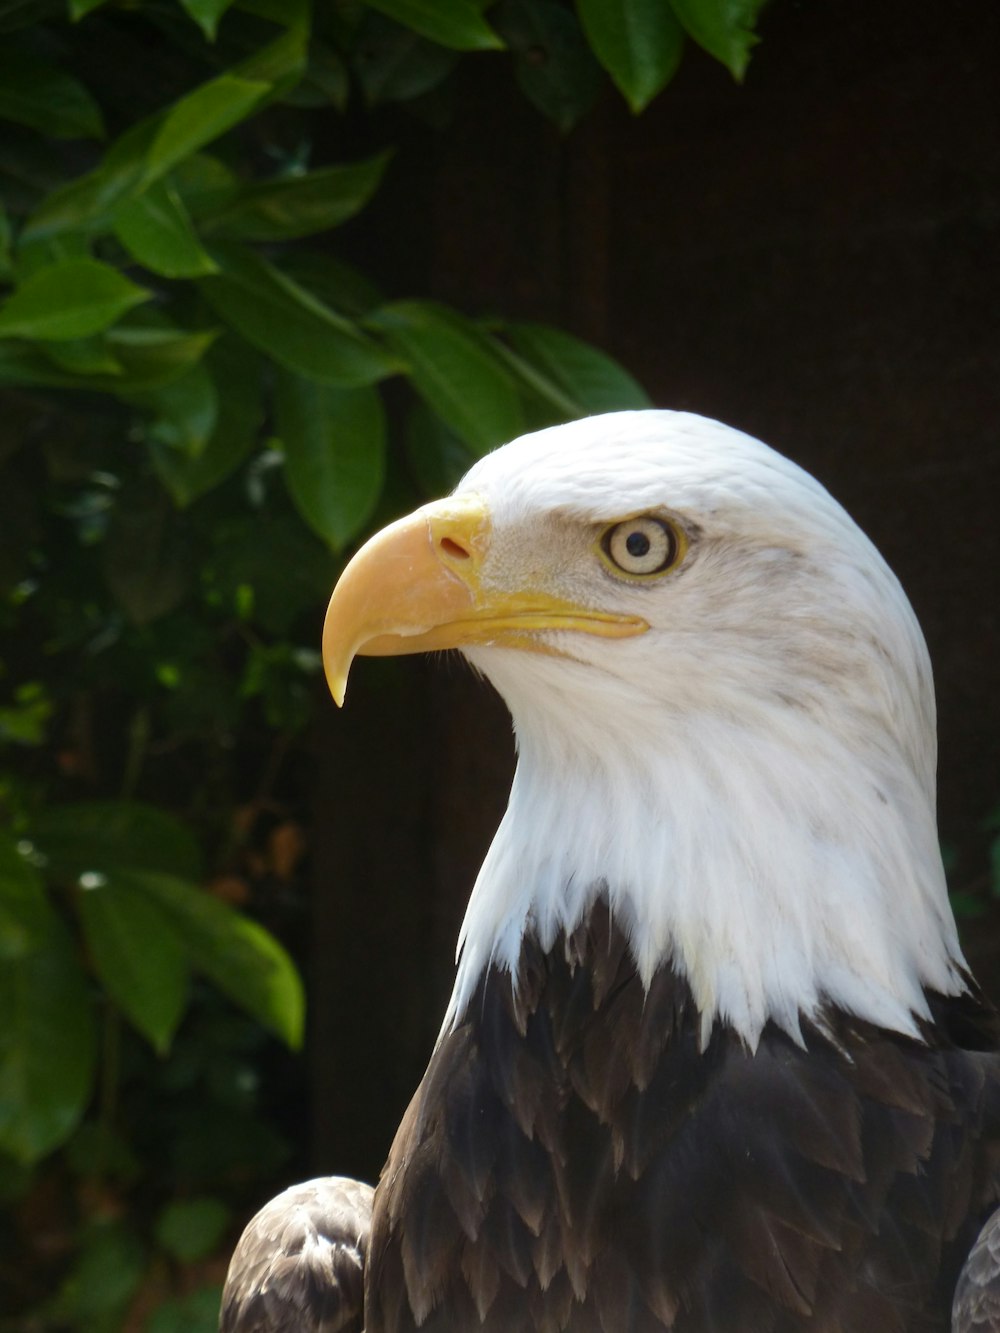 white and brown eagle in tilt shift lens